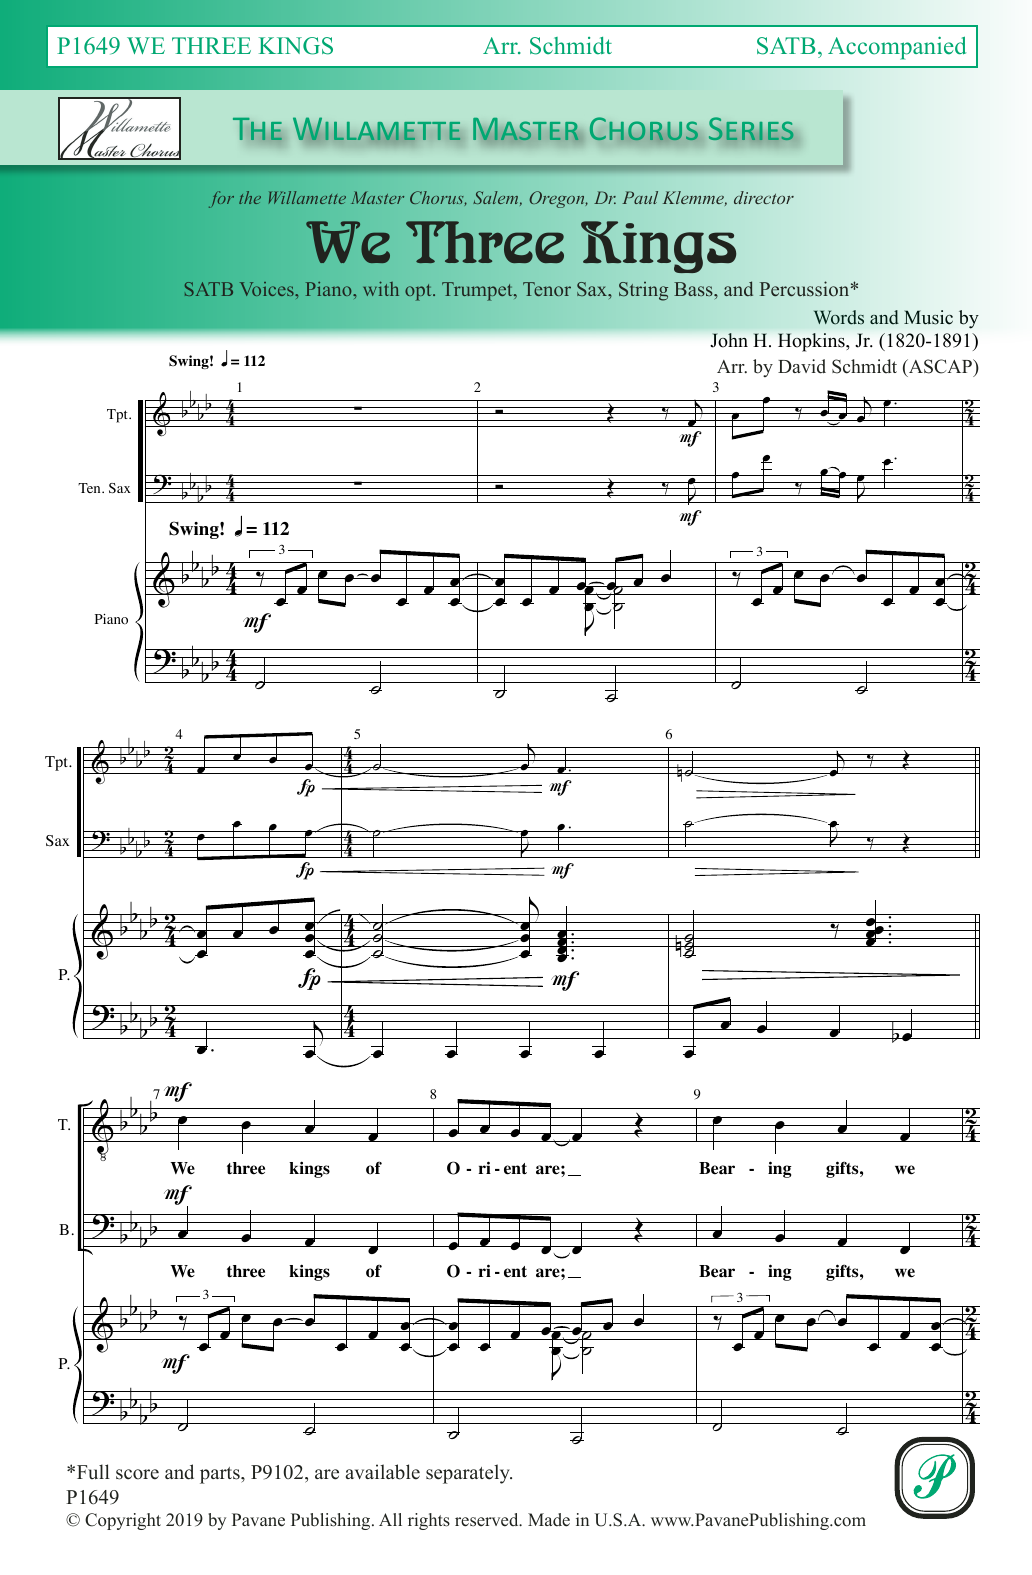 John H. Hopkins, Jr. We Three Kings (arr. David Schmidt) Sheet Music Notes & Chords for SATB Choir - Download or Print PDF